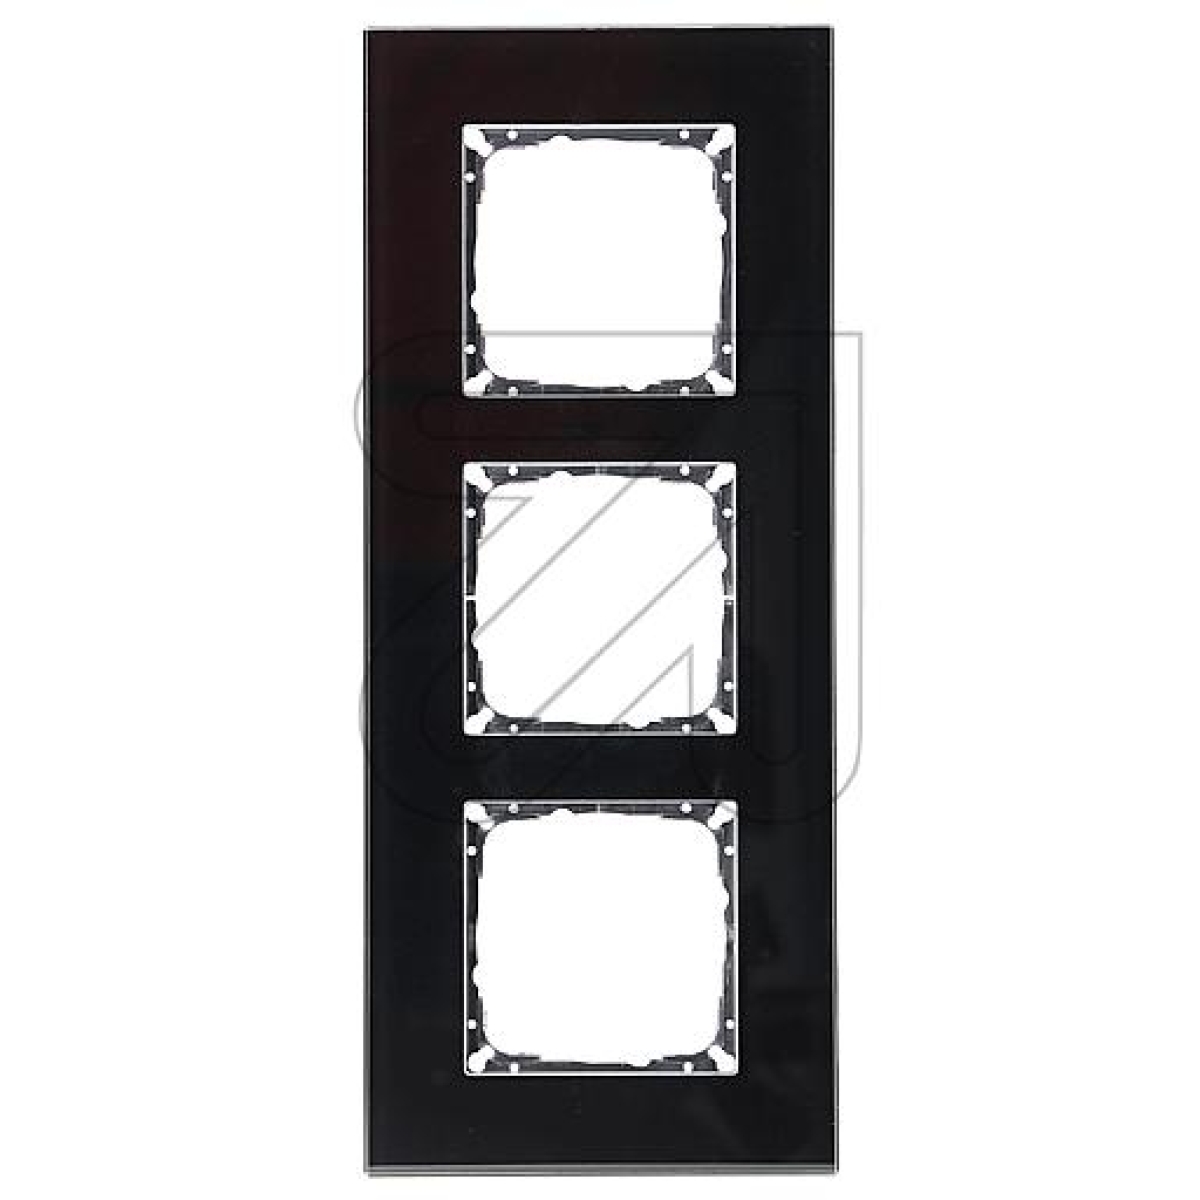 EGBV55 glass frame triple blackArticle-No: 088485